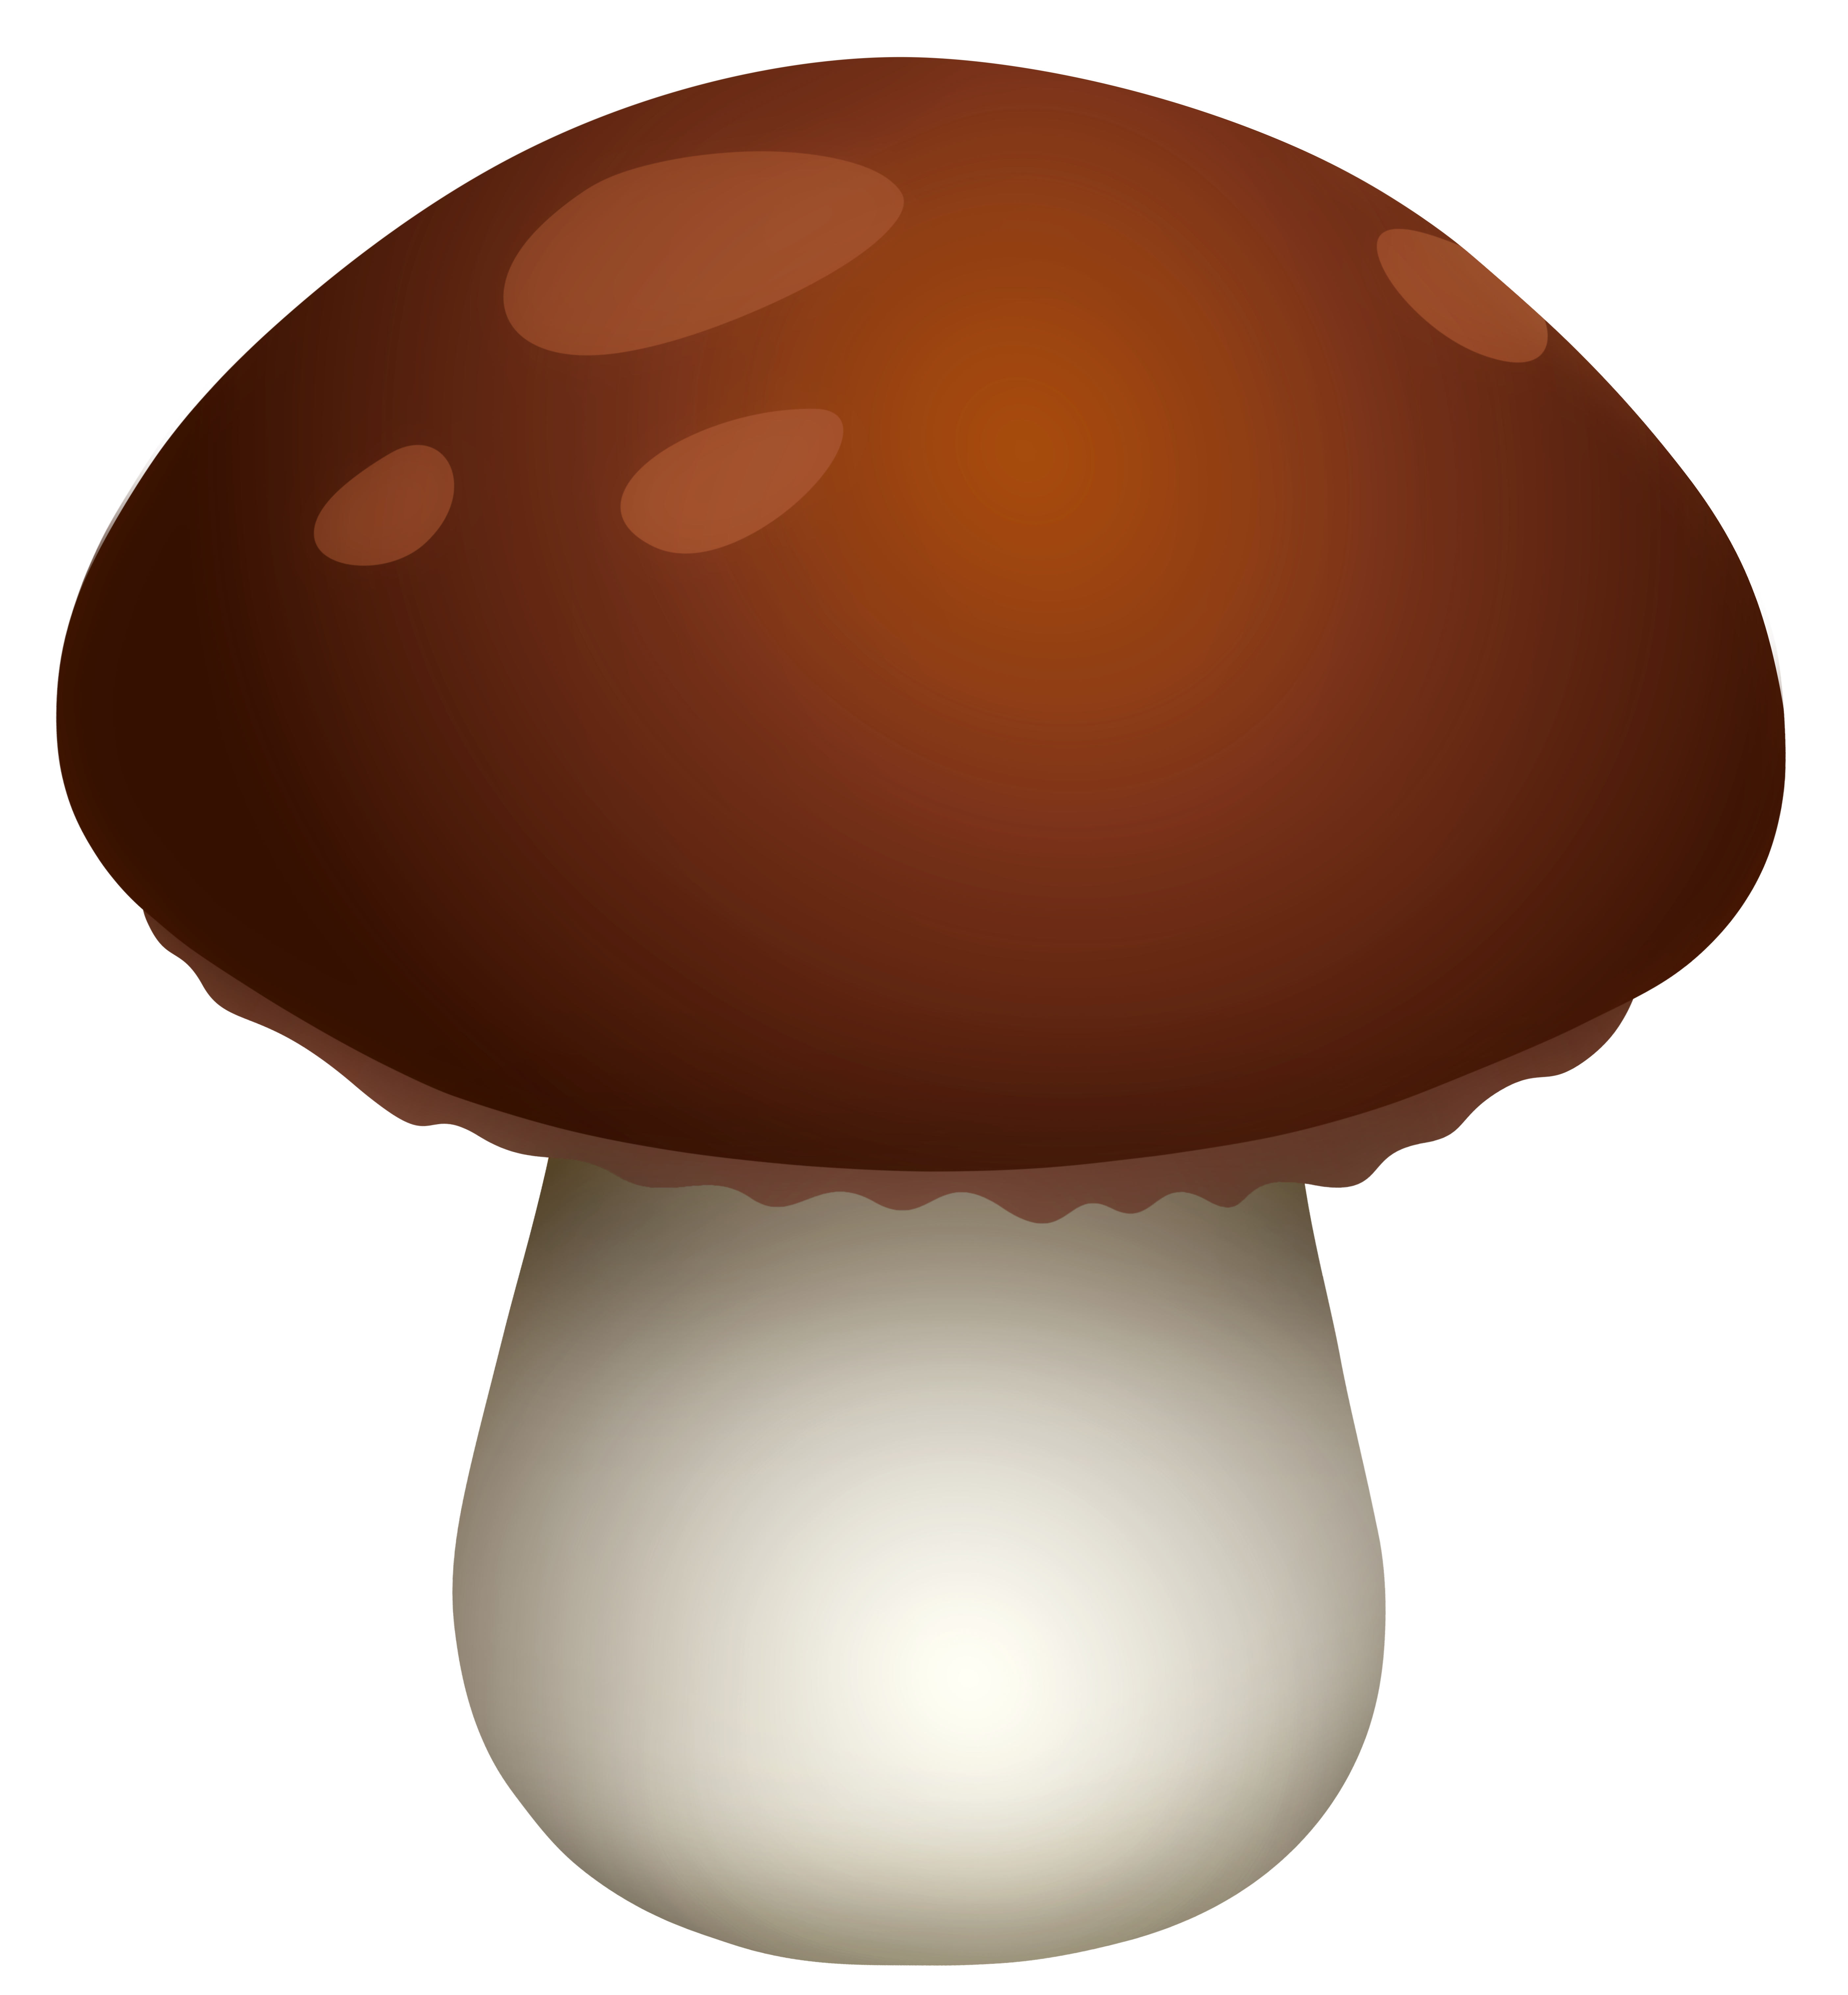 blue mushroom clipart - photo #49